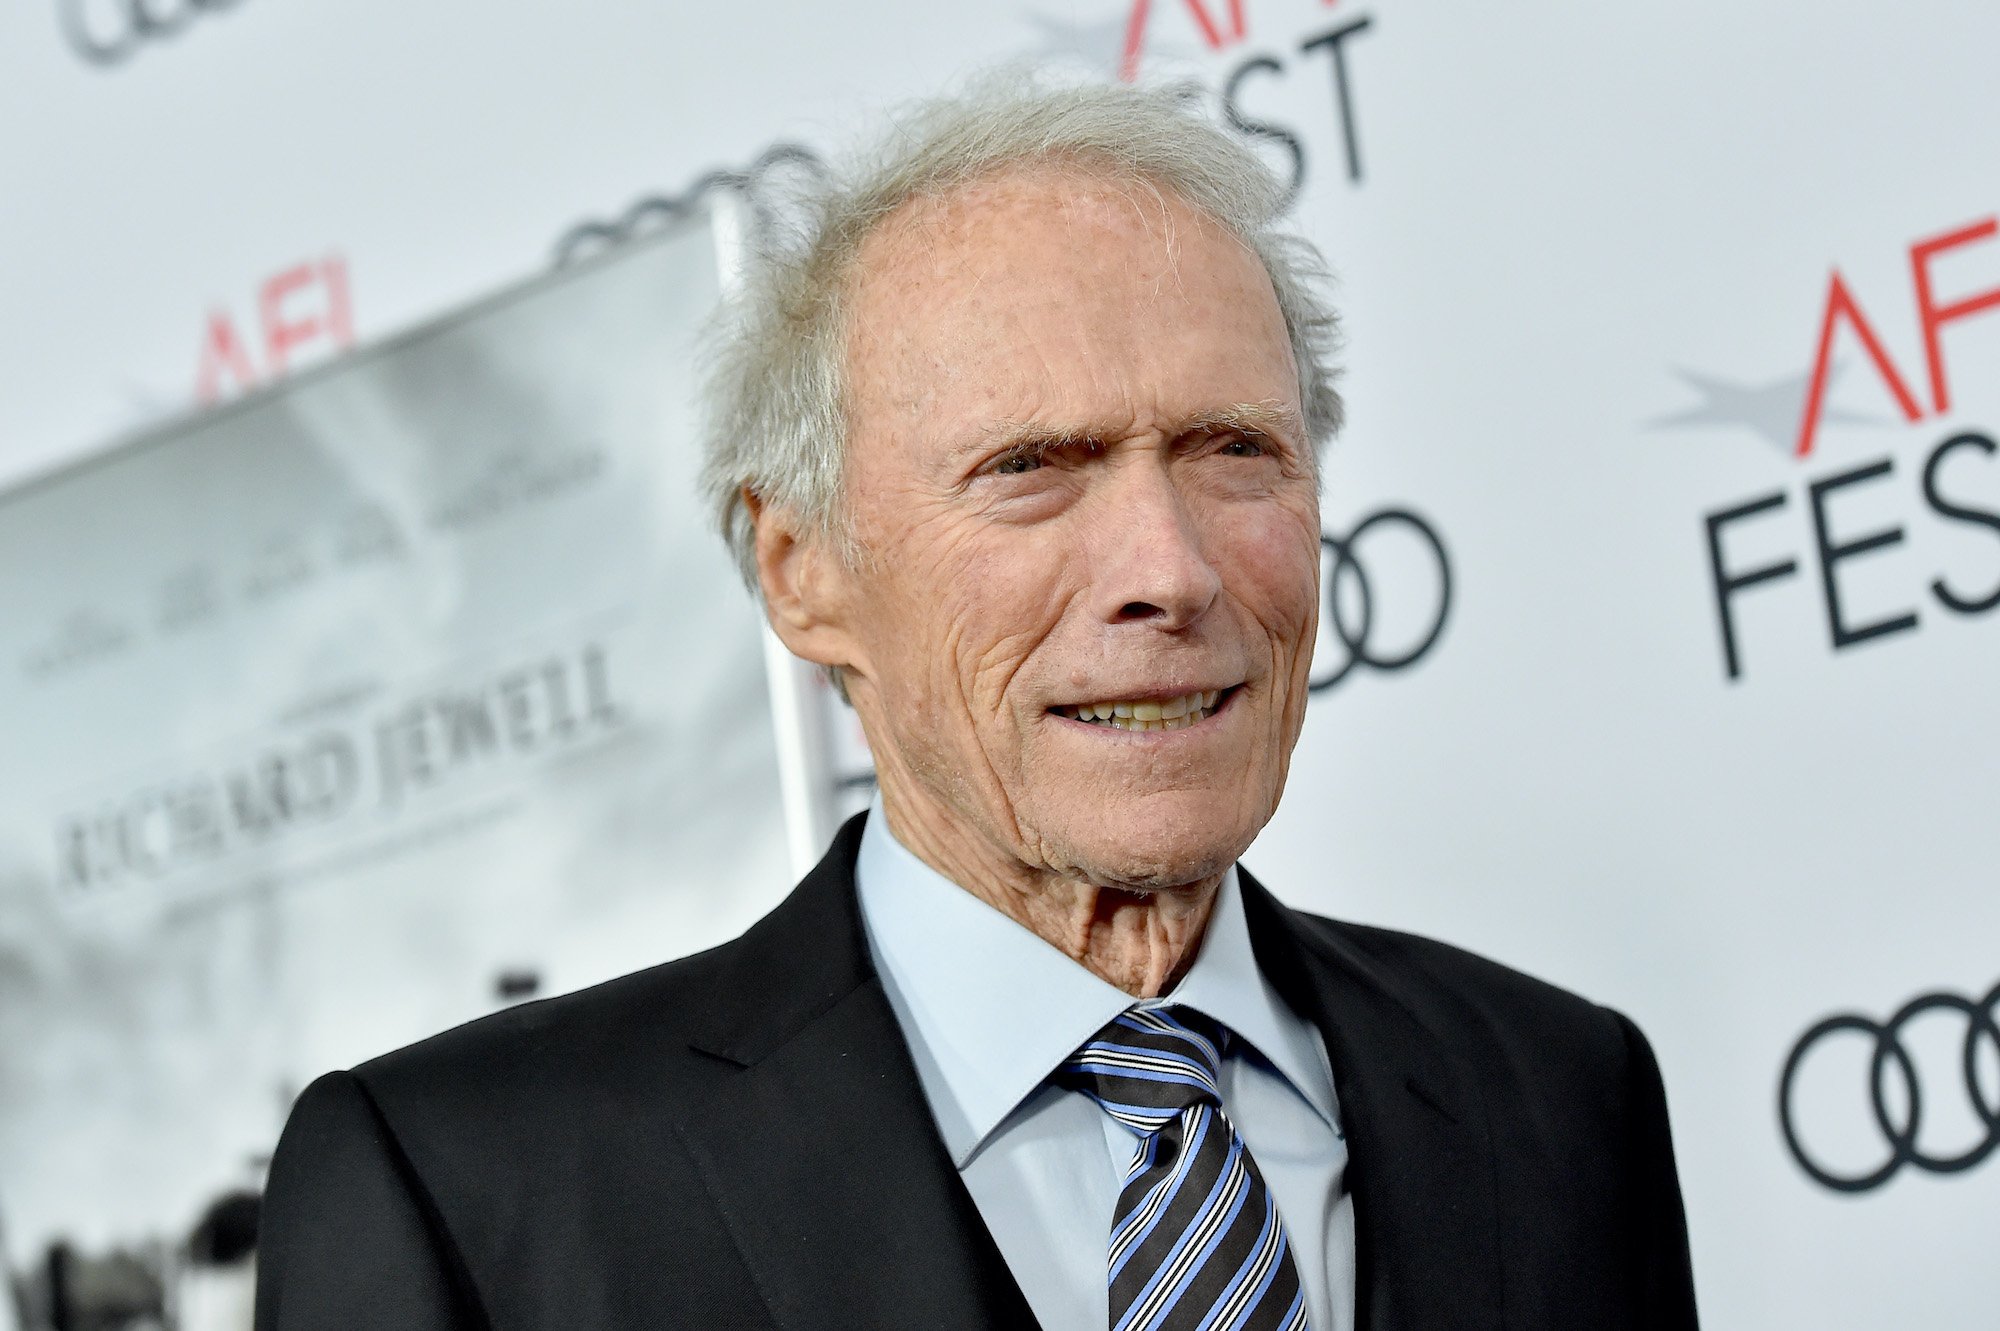 Clint Eastwood smiling